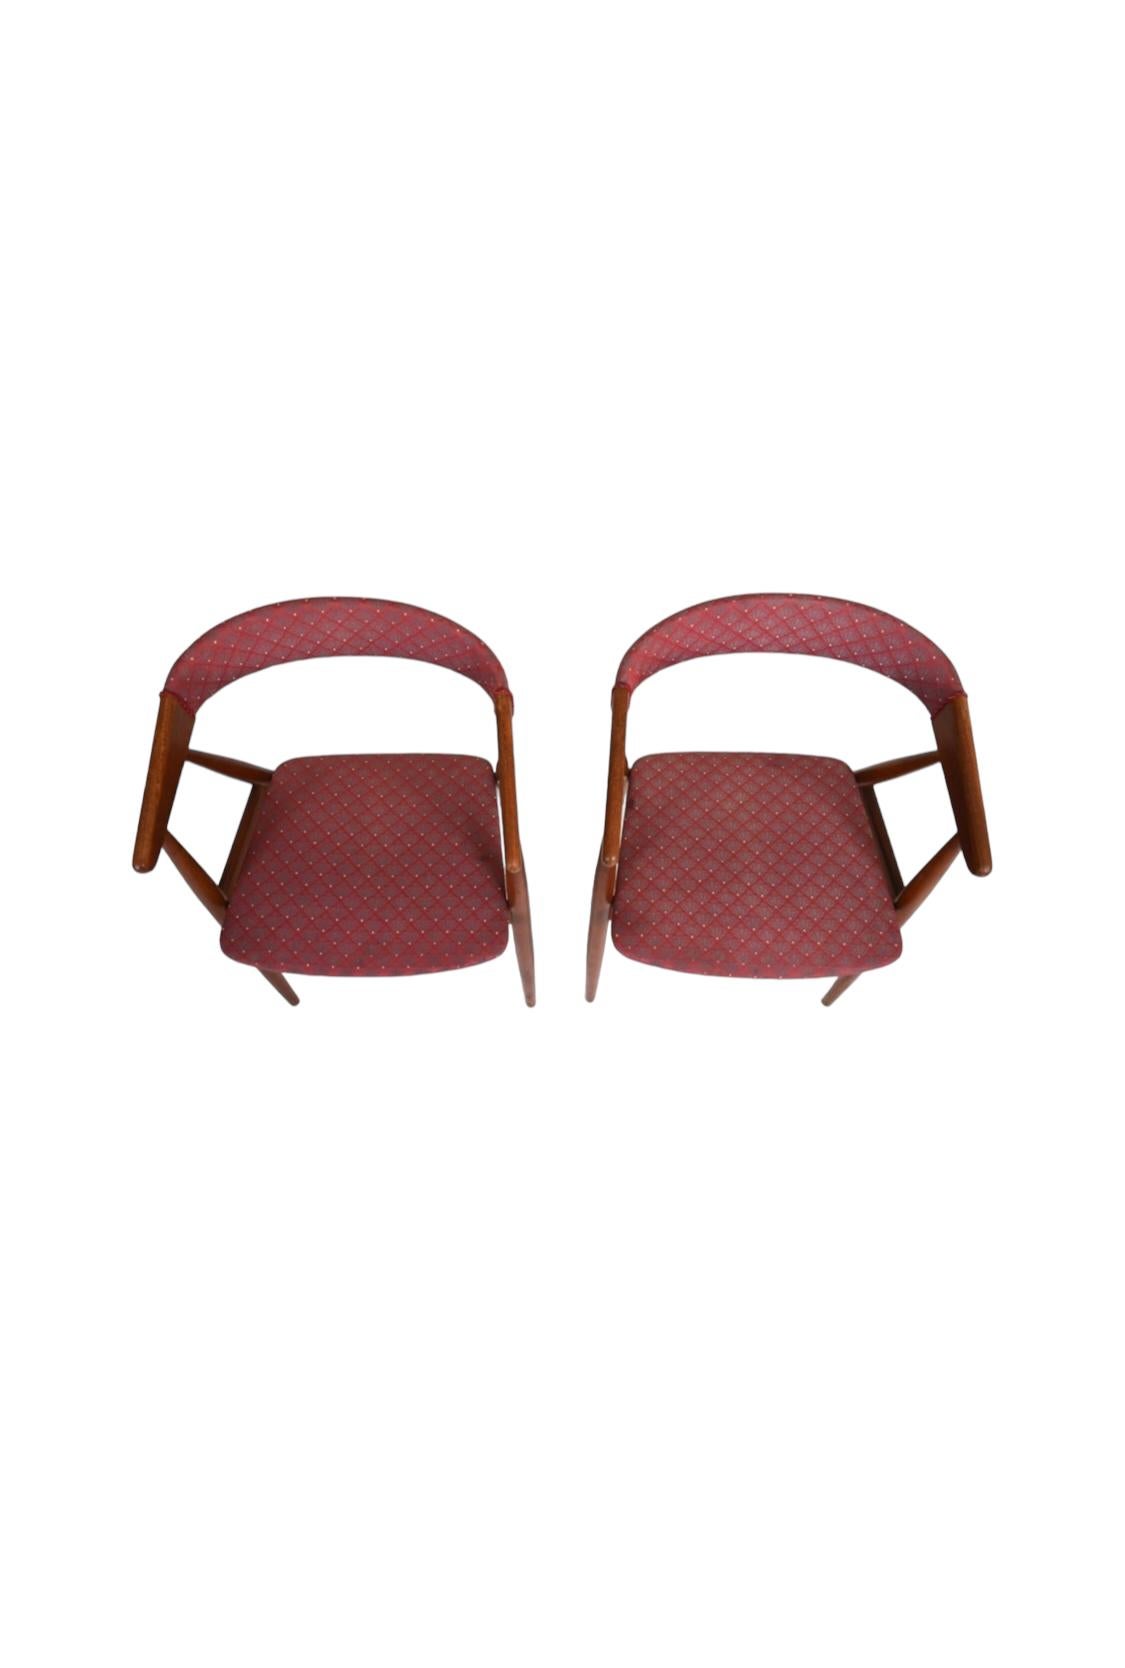 Danish Modern Teak Dining Chairs by Aksel Bender Madsen & Ejner Larsen 5